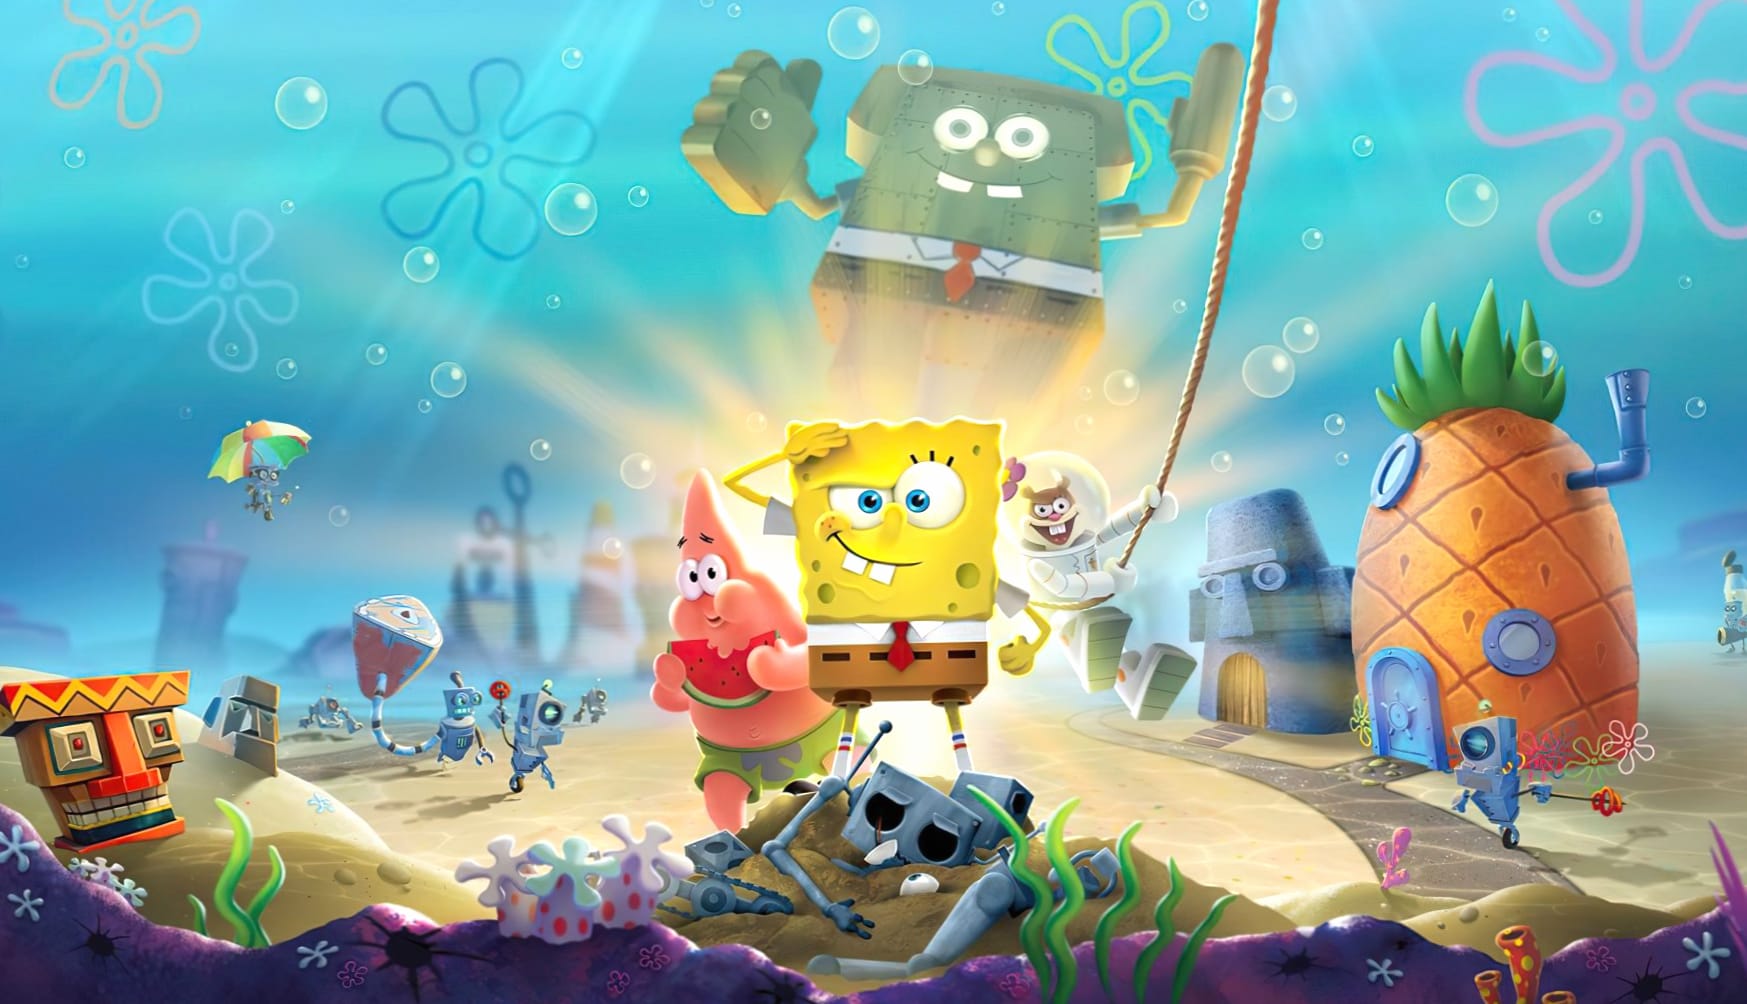 SpongeBob SquarePants Battle for Bikini Bottom at 1280 x 960 size wallpapers HD quality